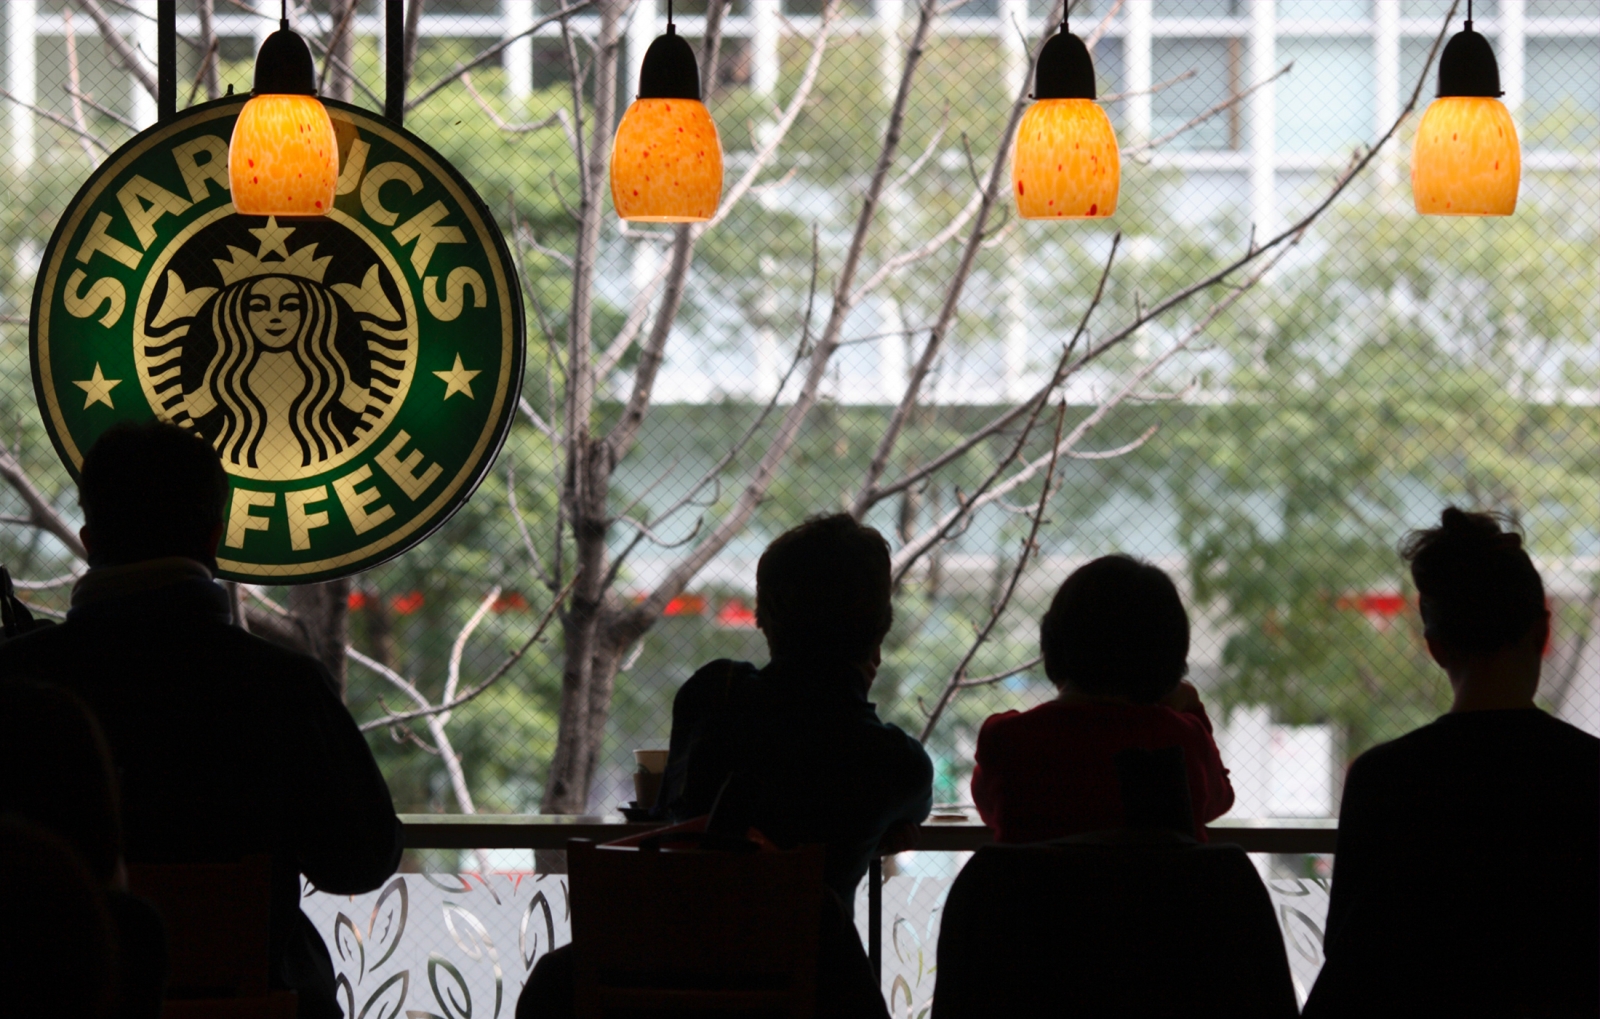 GC hacks Starbucks’ servers to catch Adventist account holders